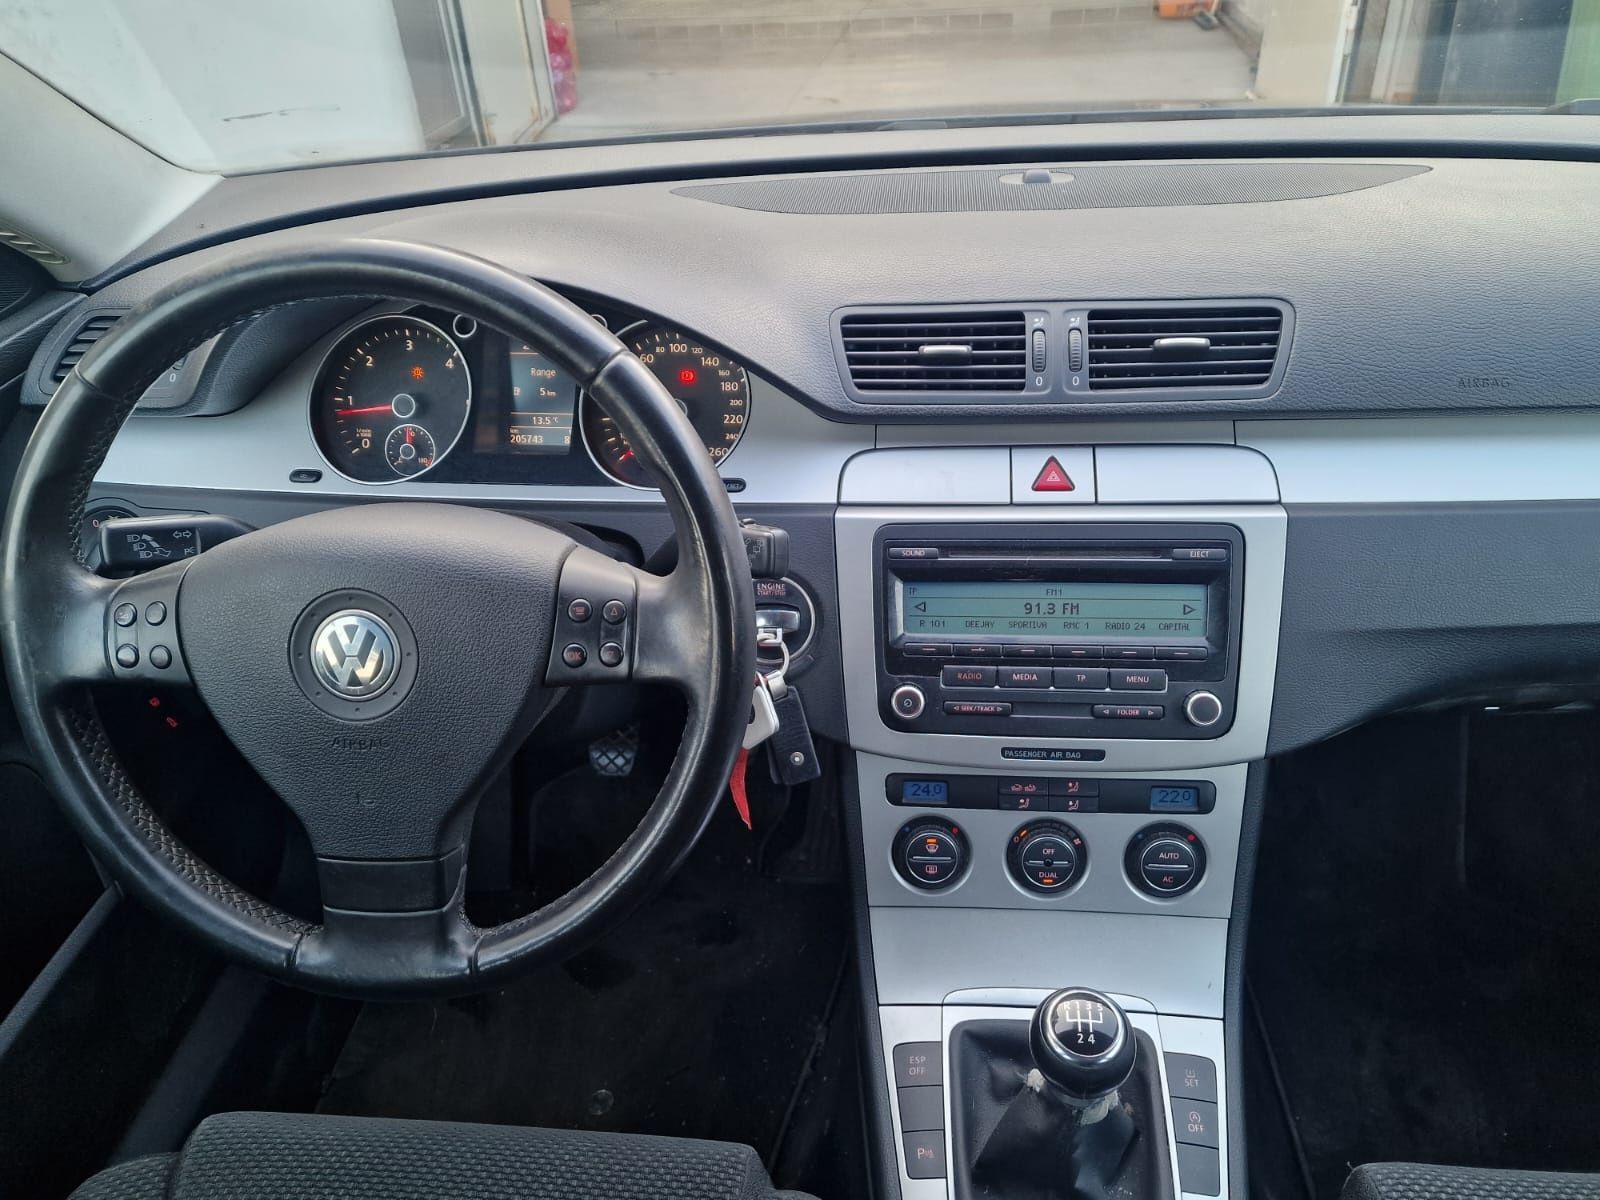 VW Passat#Euro5#BlueMotion#Km Reali